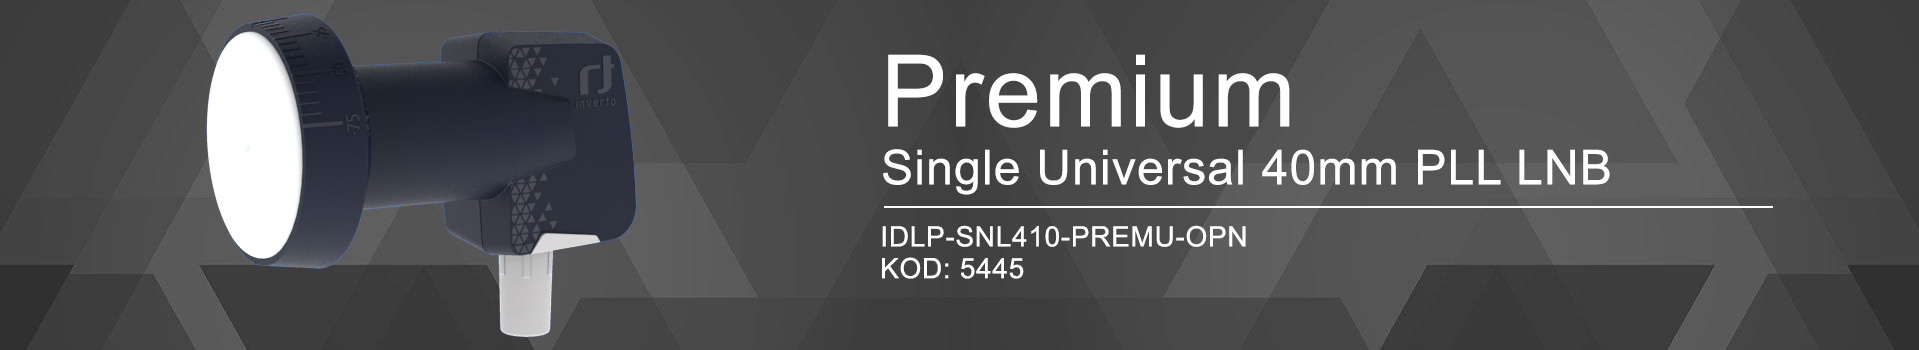 konwerter satelitarny Inverto Single Premium IDLP-SNL410-PREMU-OPN